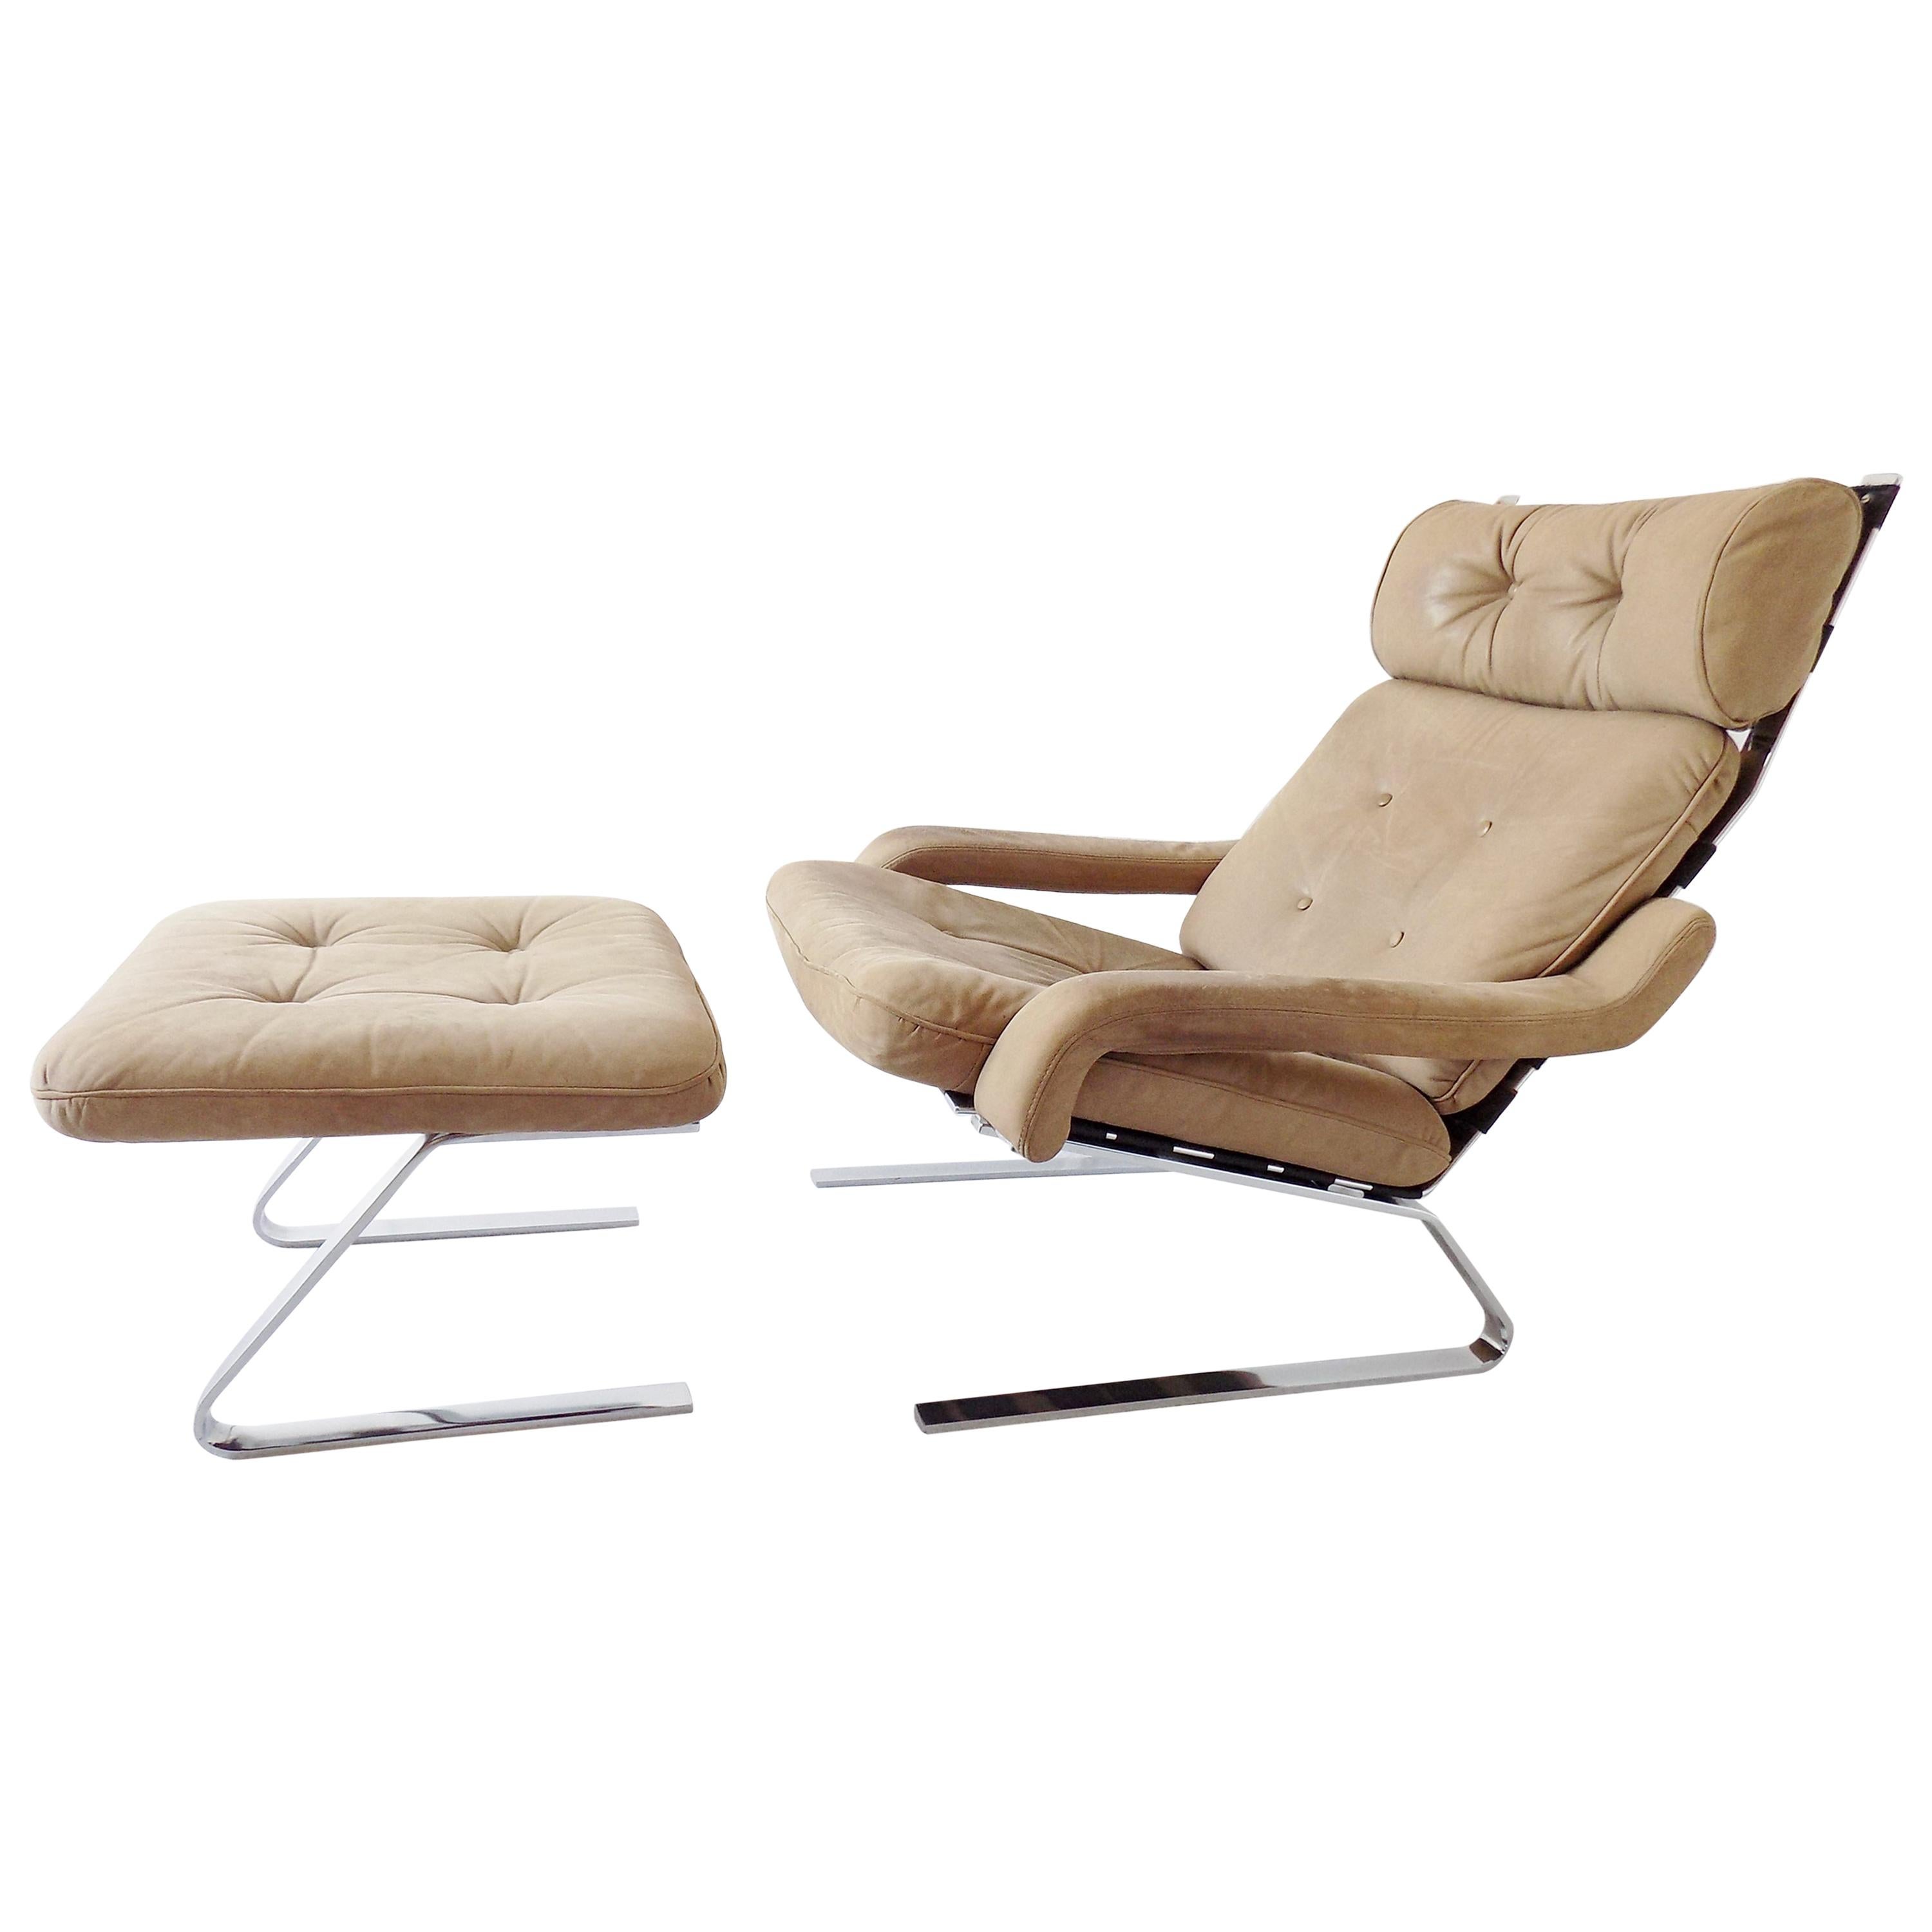 Danish Swing Lounge Chair with ottoman, Nubuk leather, Mid-Century modern, Chrom